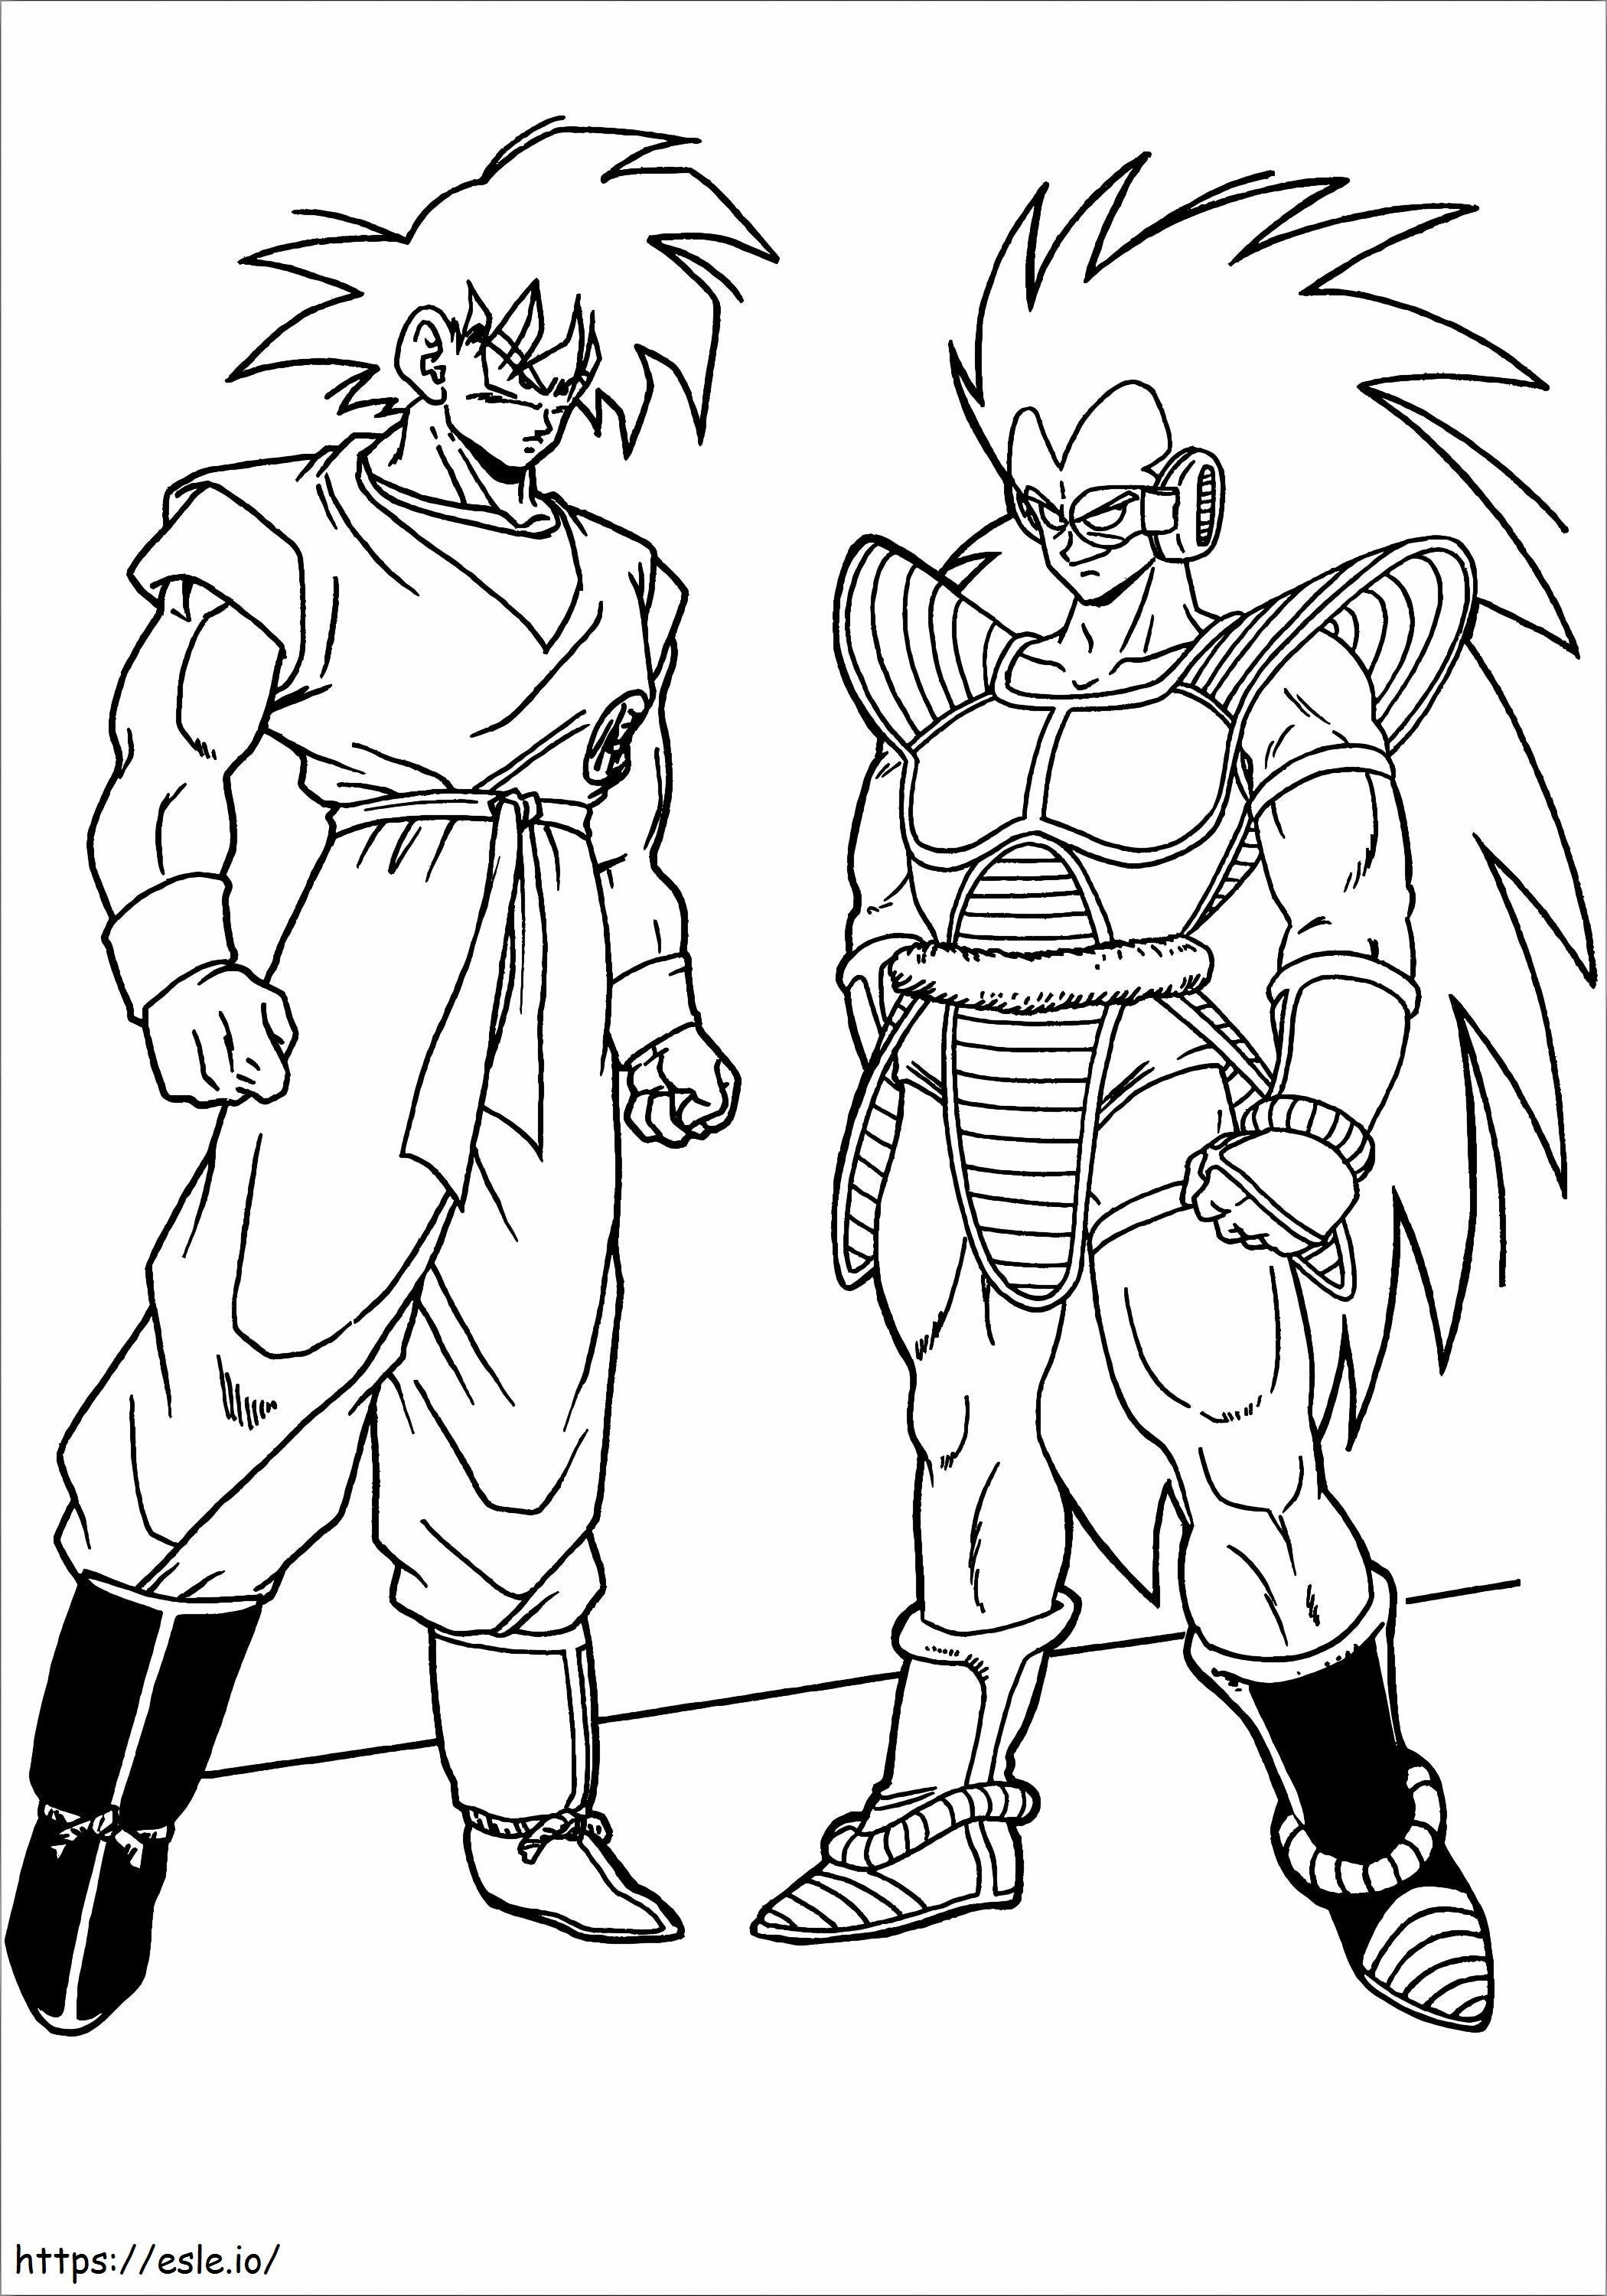 Coloriage Goku et Vegeta mignons à imprimer dessin